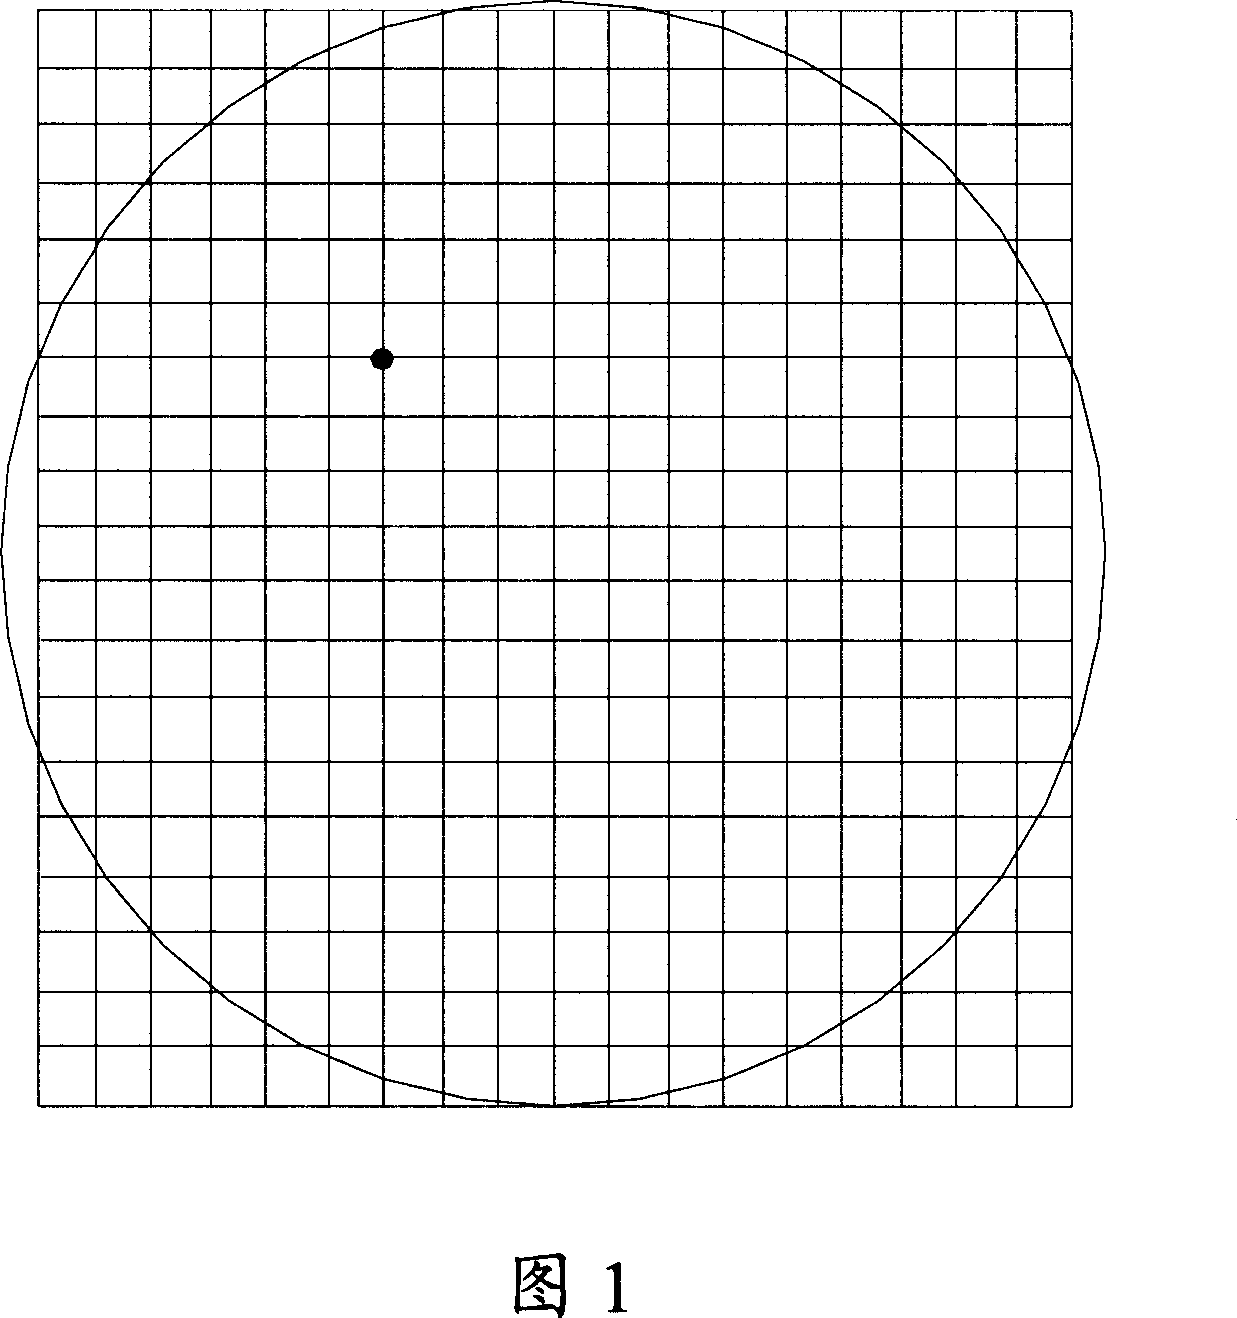 Marking pen design for optical microscope